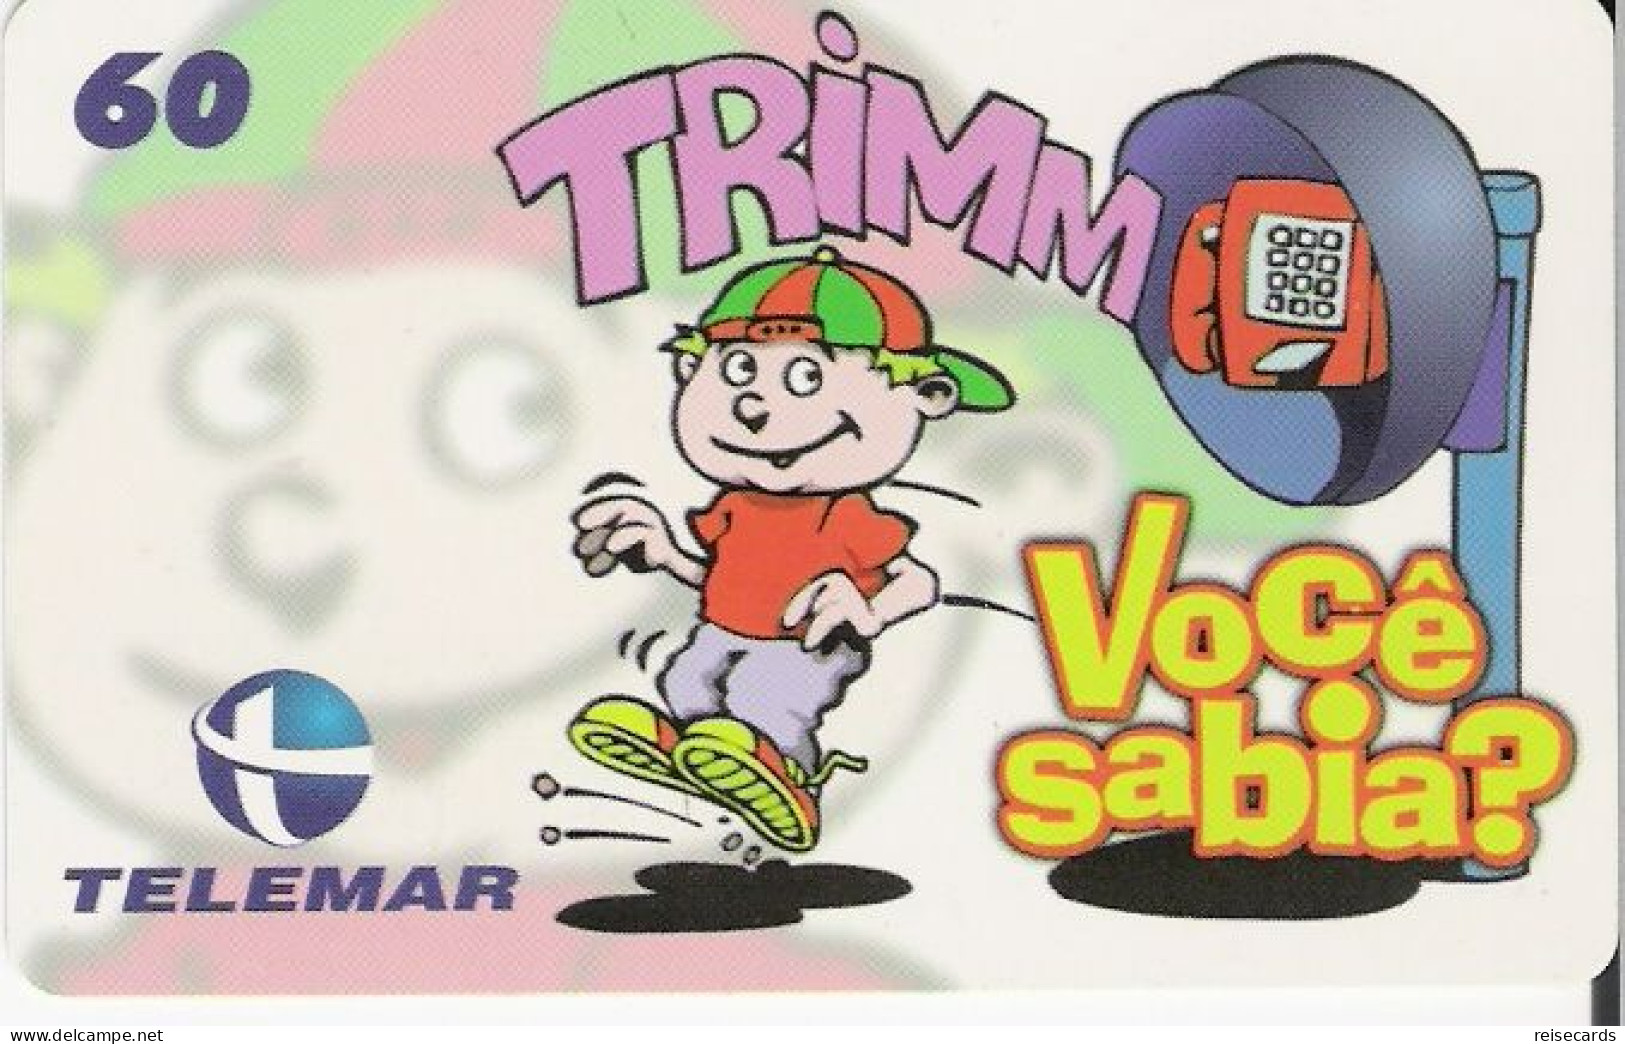 Brazil: Telemar - Você Sabia? Trimm - Brazil